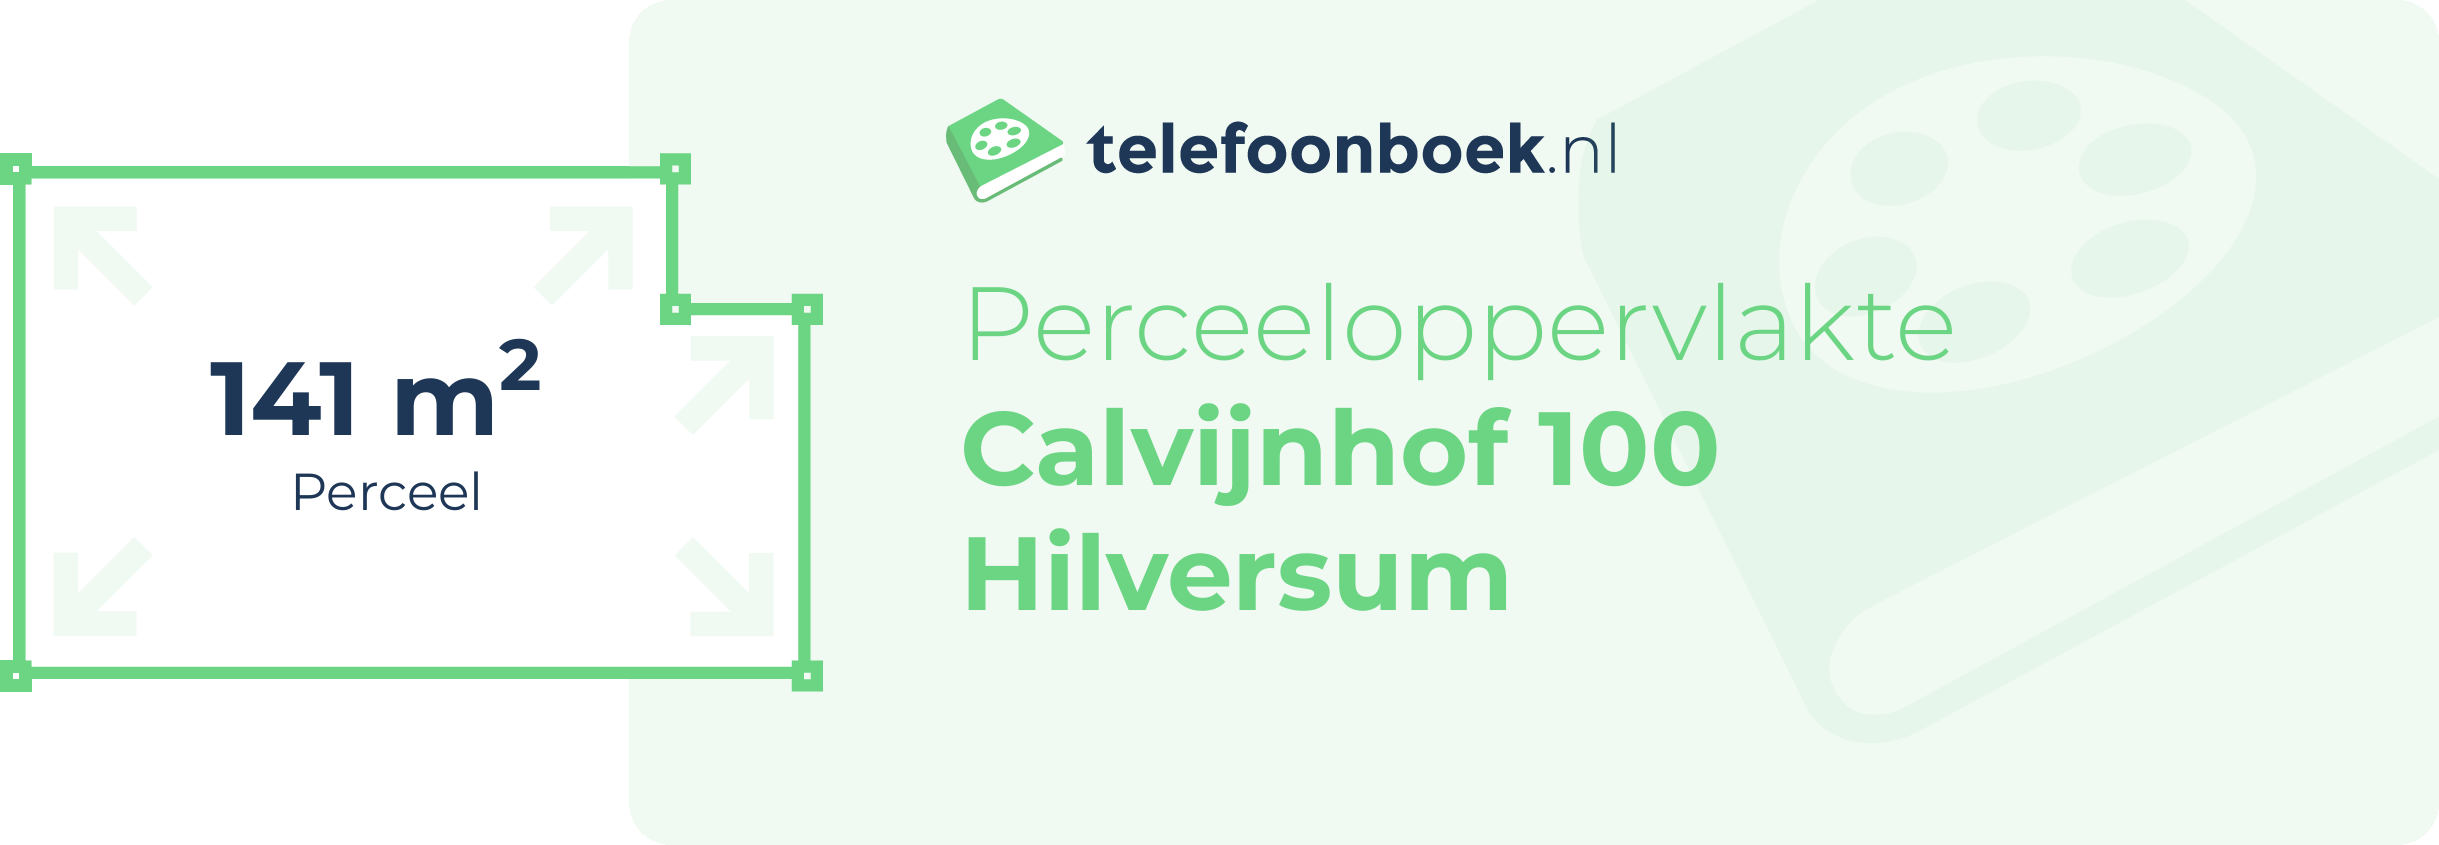 Perceeloppervlakte Calvijnhof 100 Hilversum